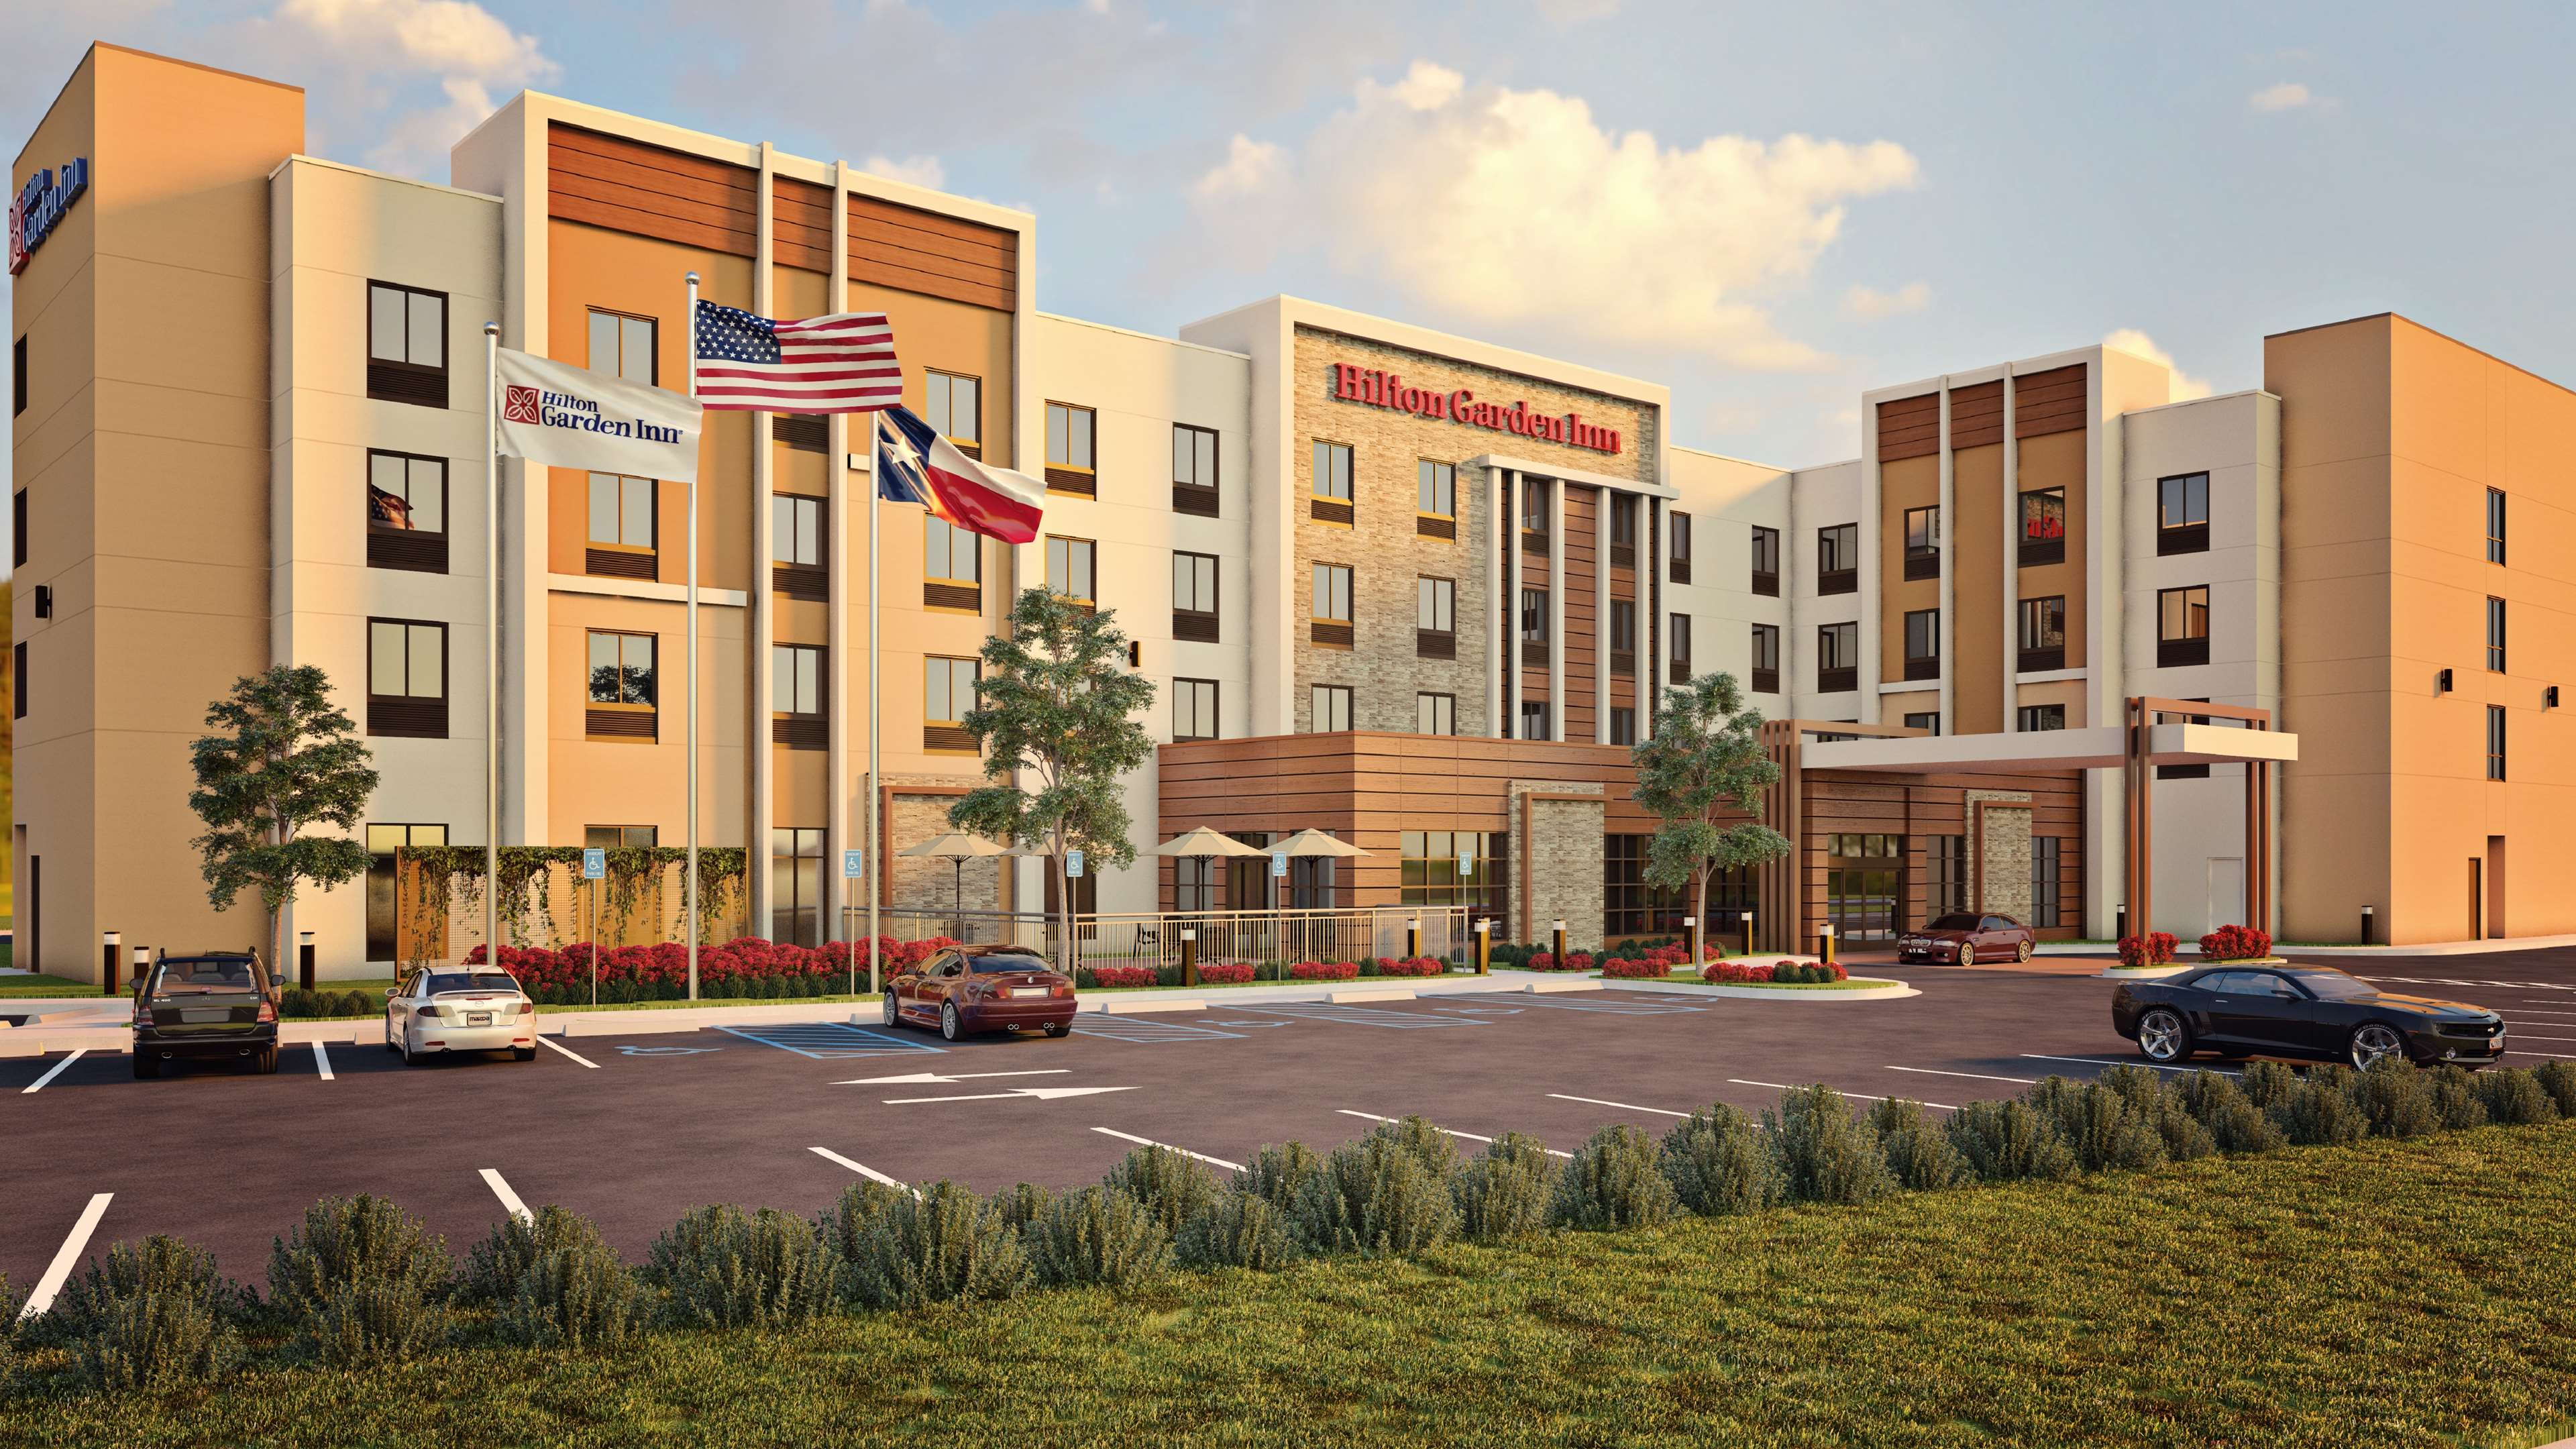 Hilton Garden Inn Waco 5800 Legend Lake Parkway Waco Tx Hotels Motels - Mapquest